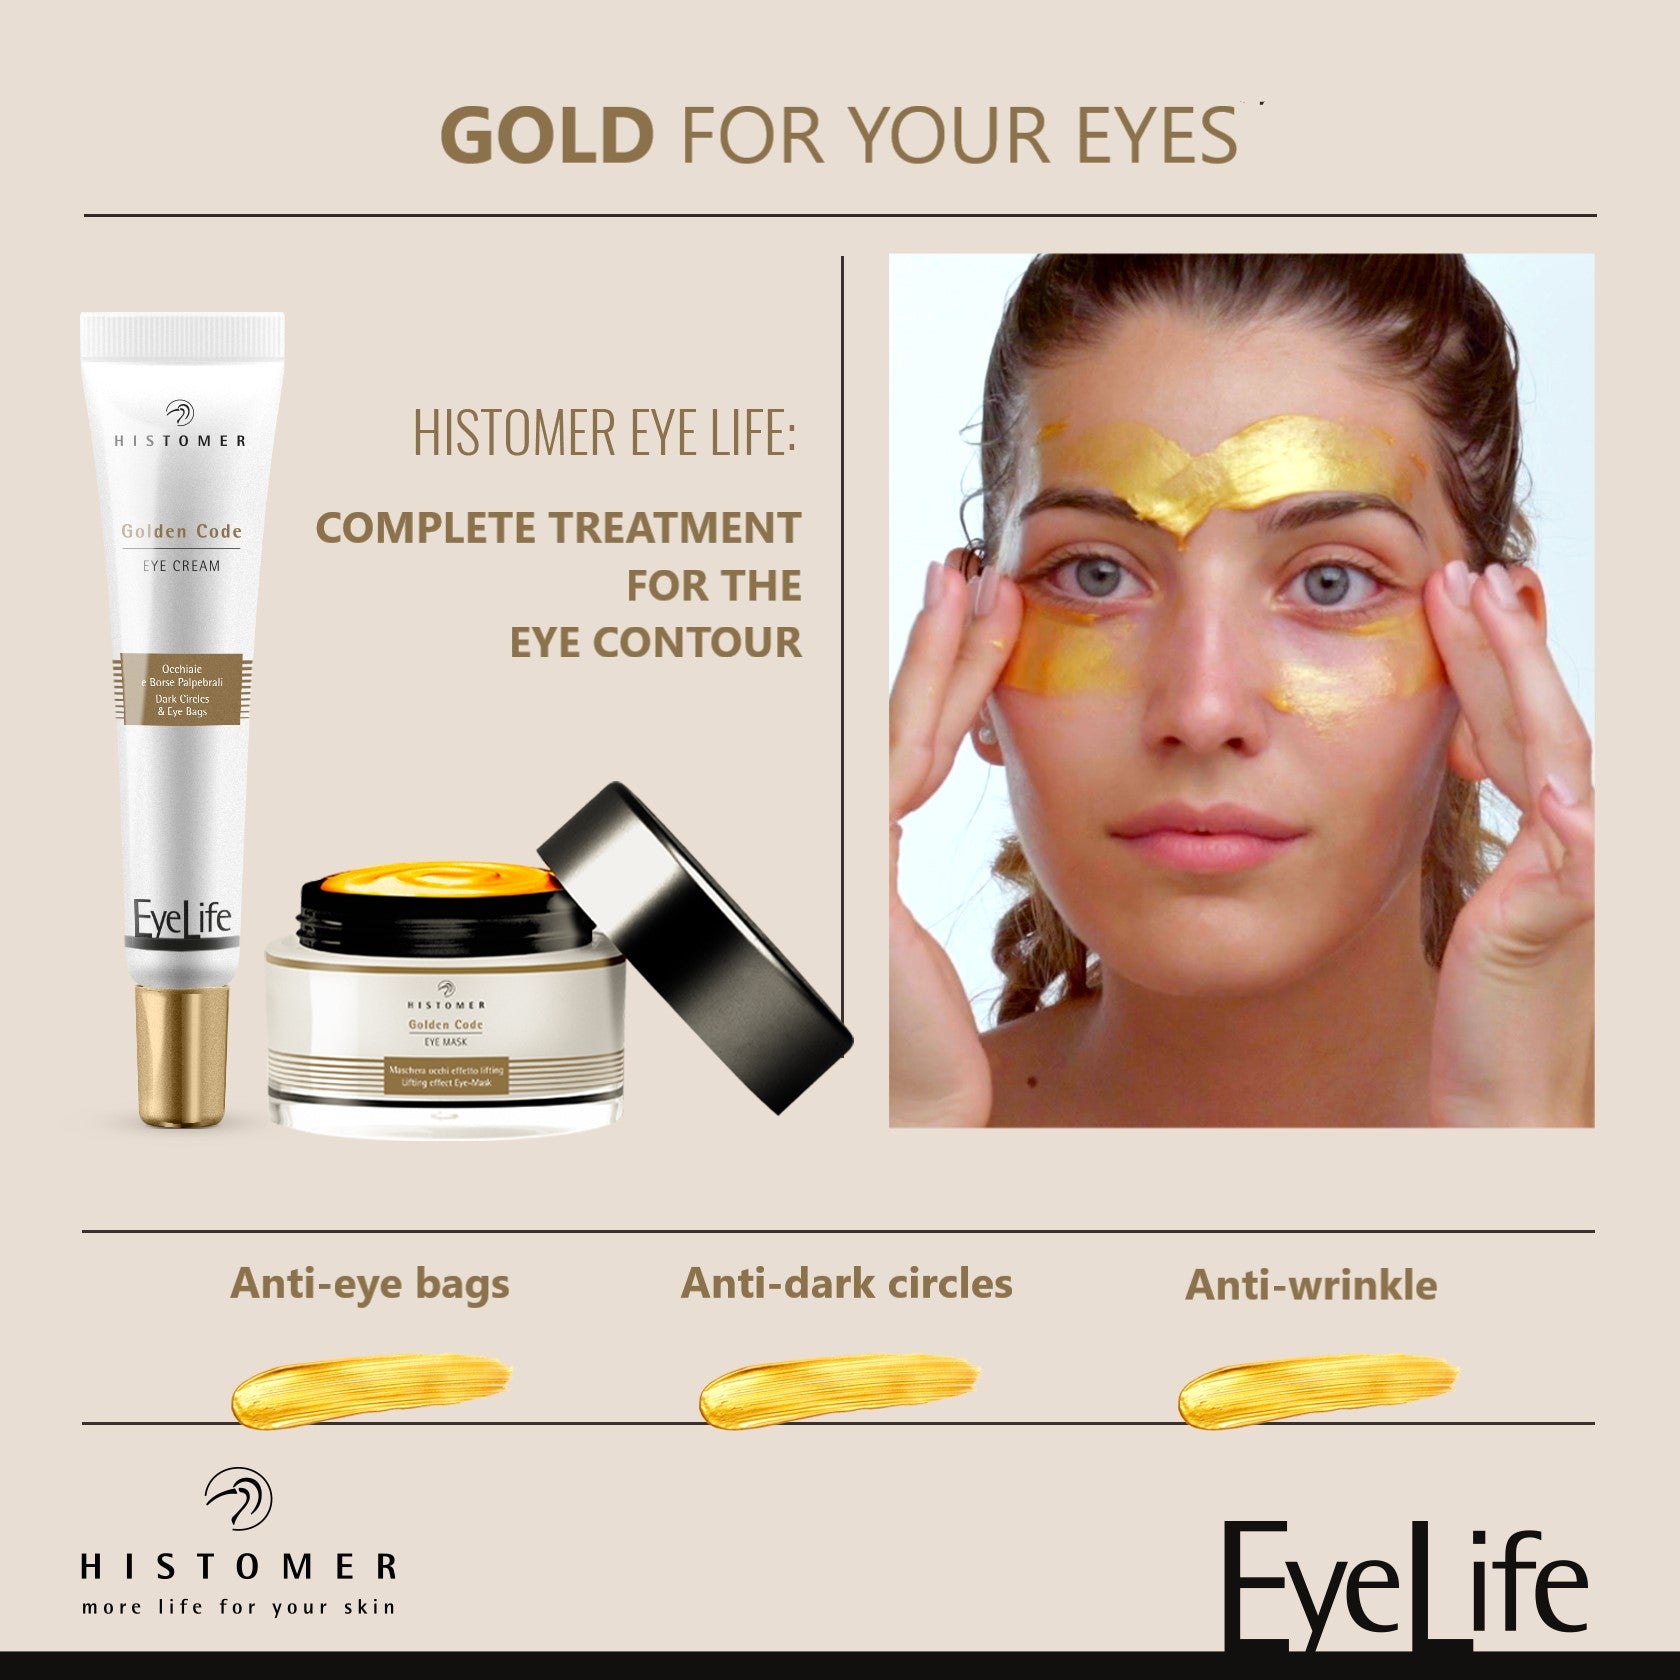 Histomer - Eye Life Golden Code Eye Cream